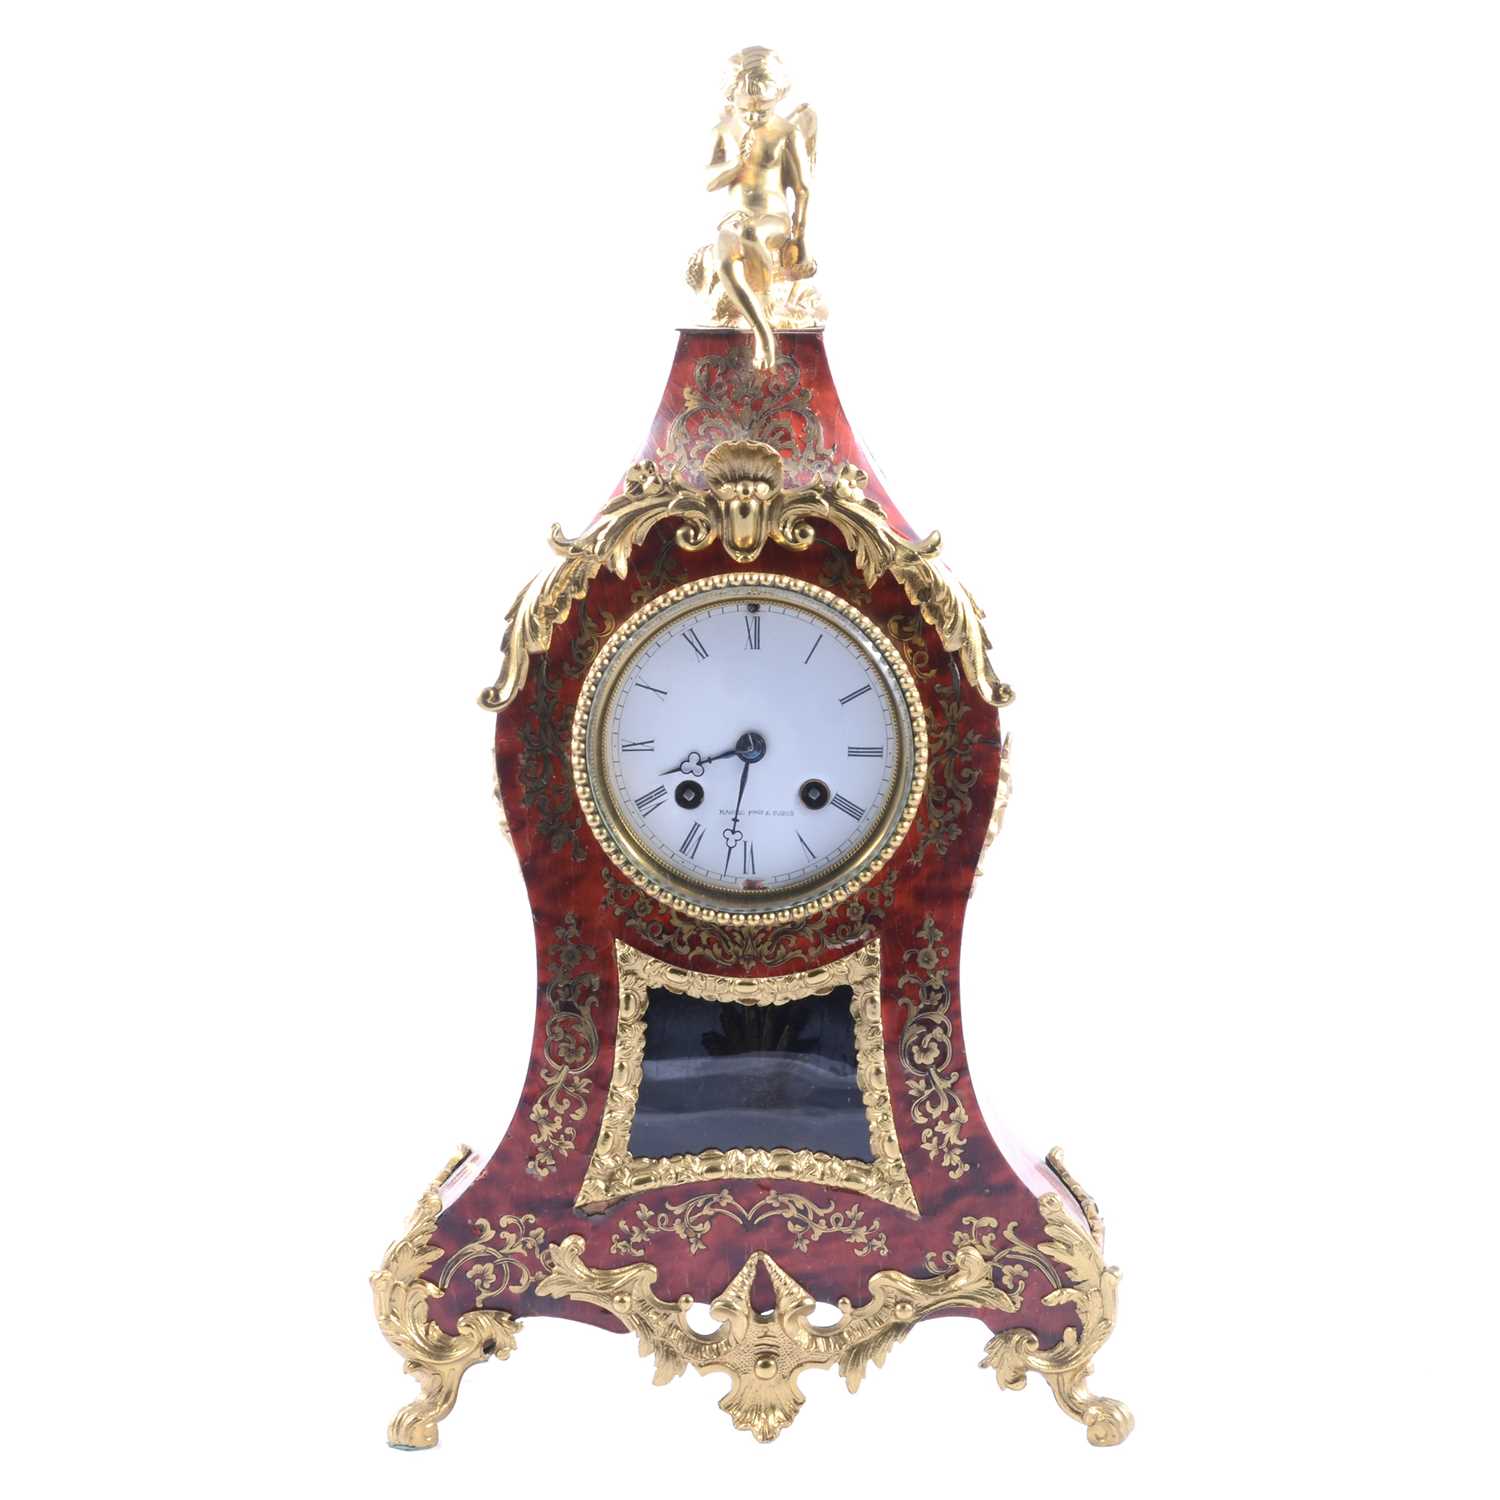 French mantel clock, signed Raingo Freres, Paris